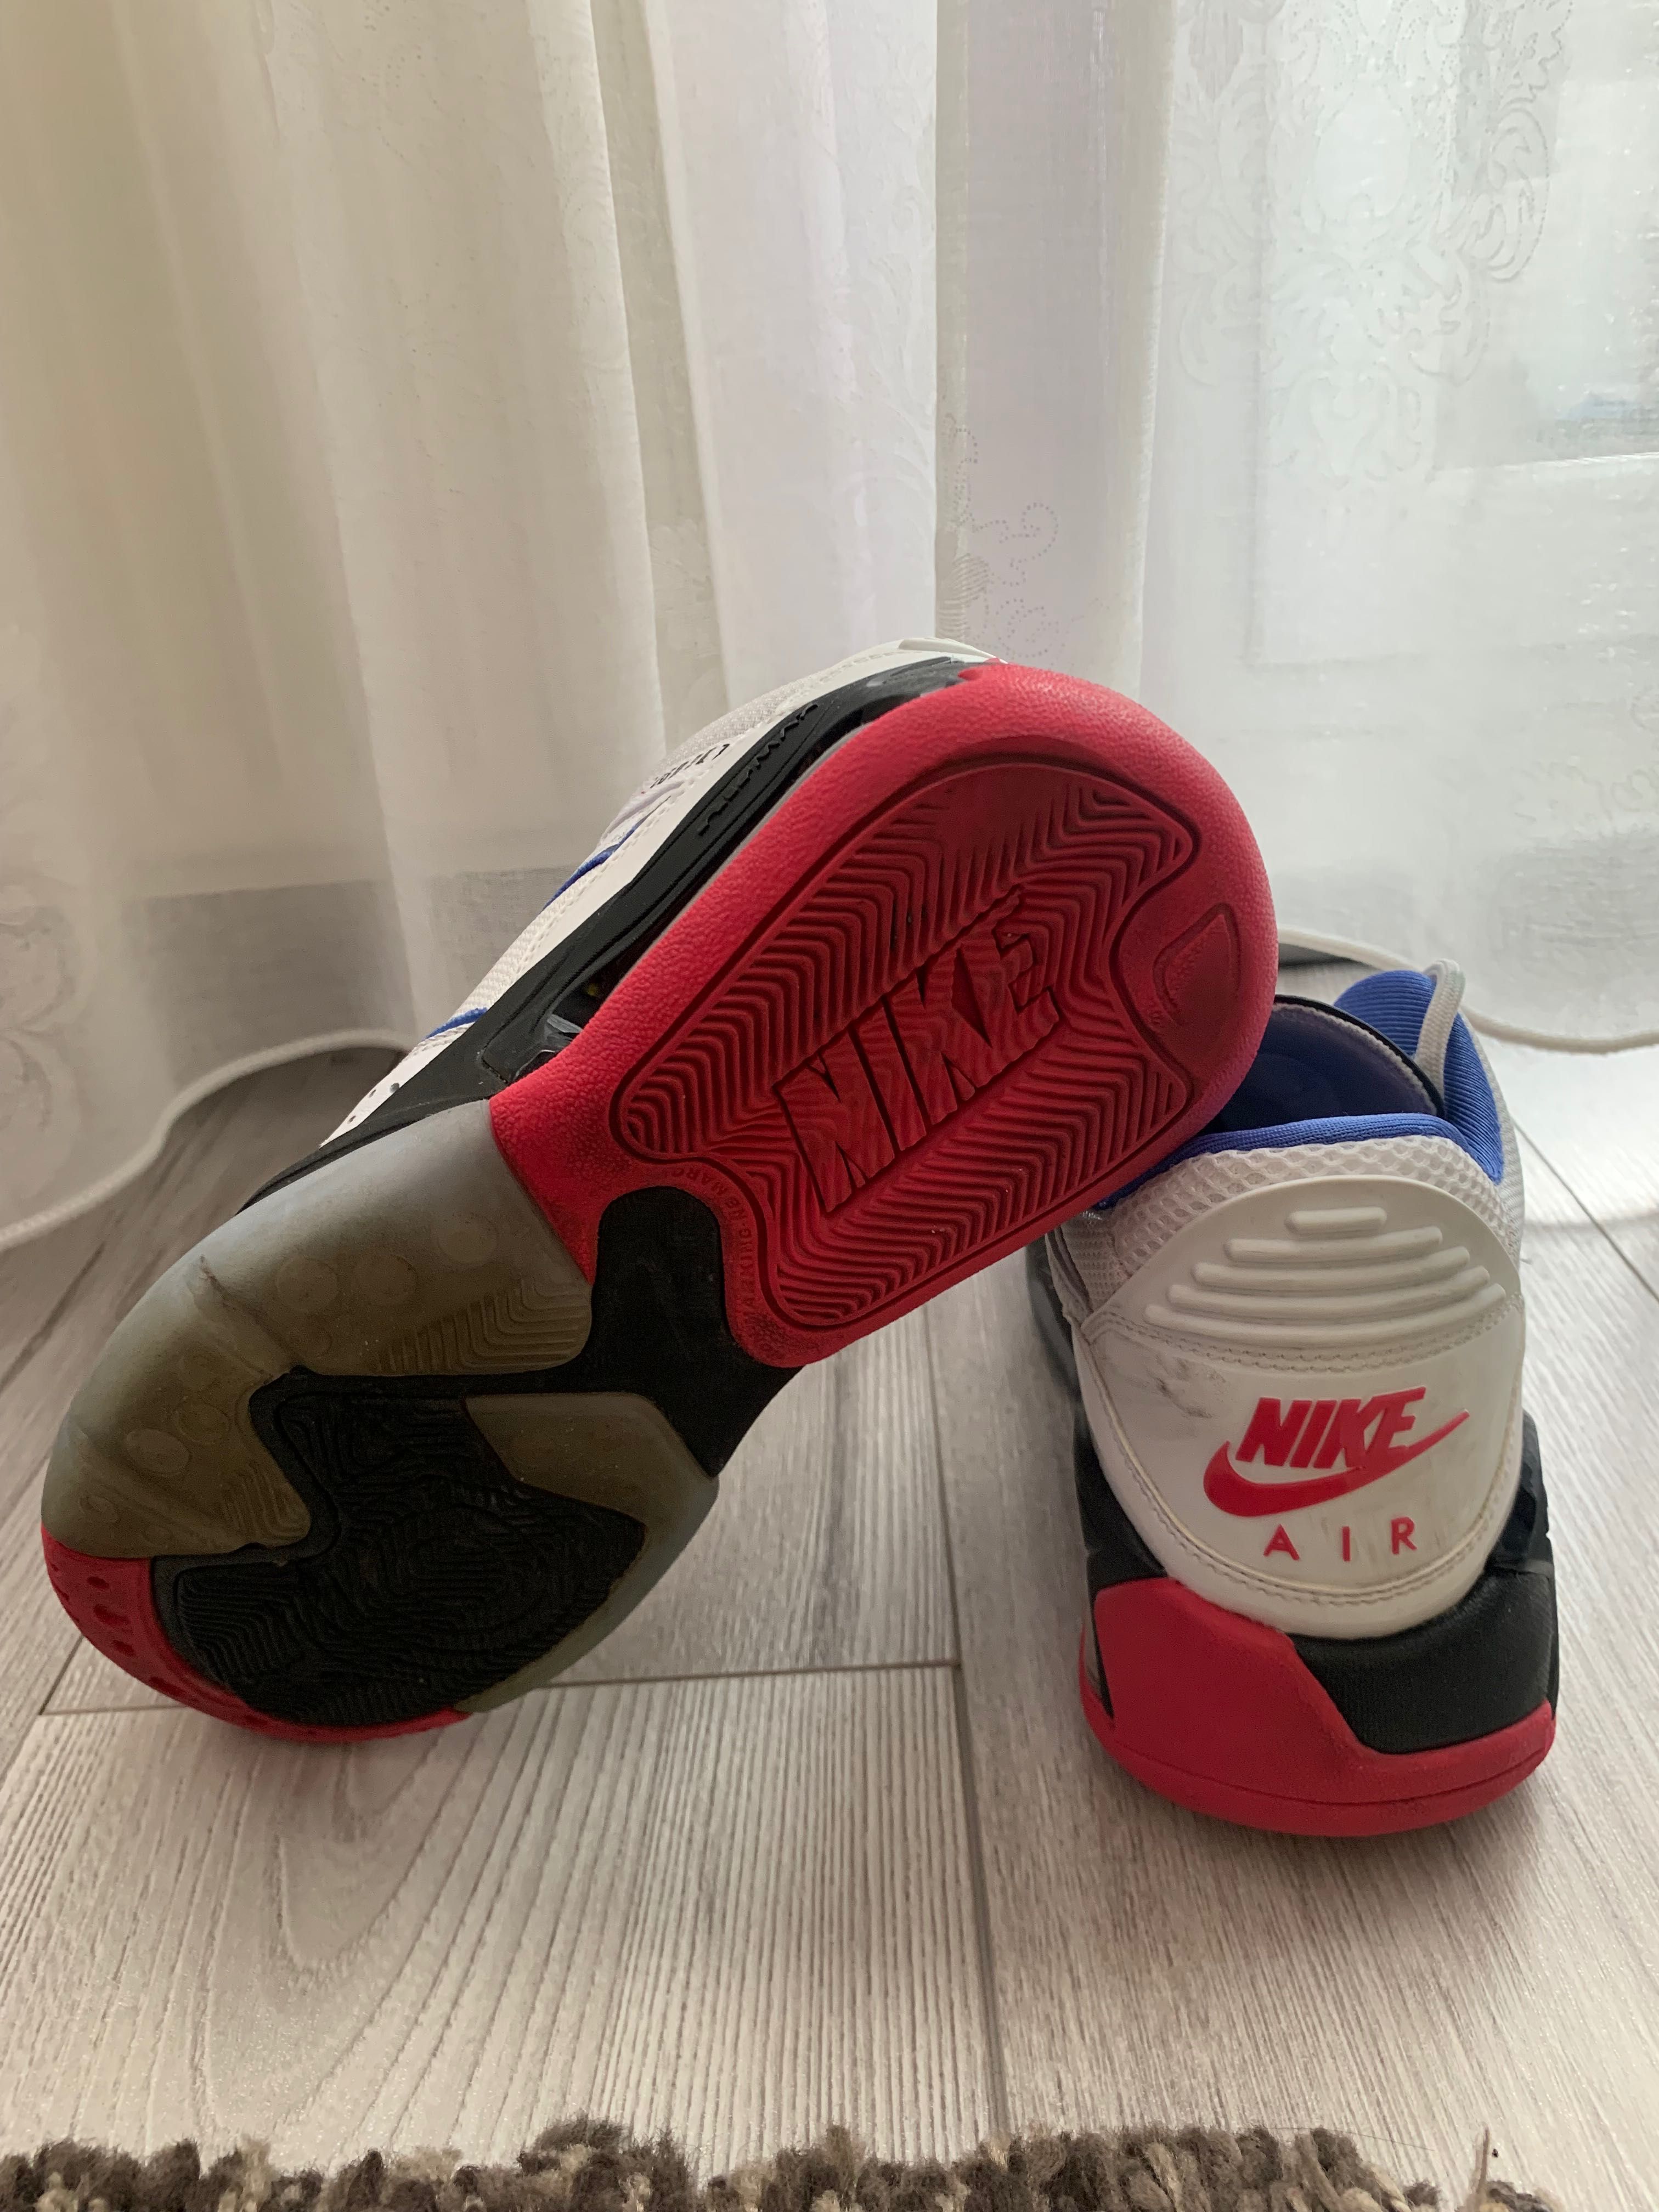 Adidasi Jordan Nike Air